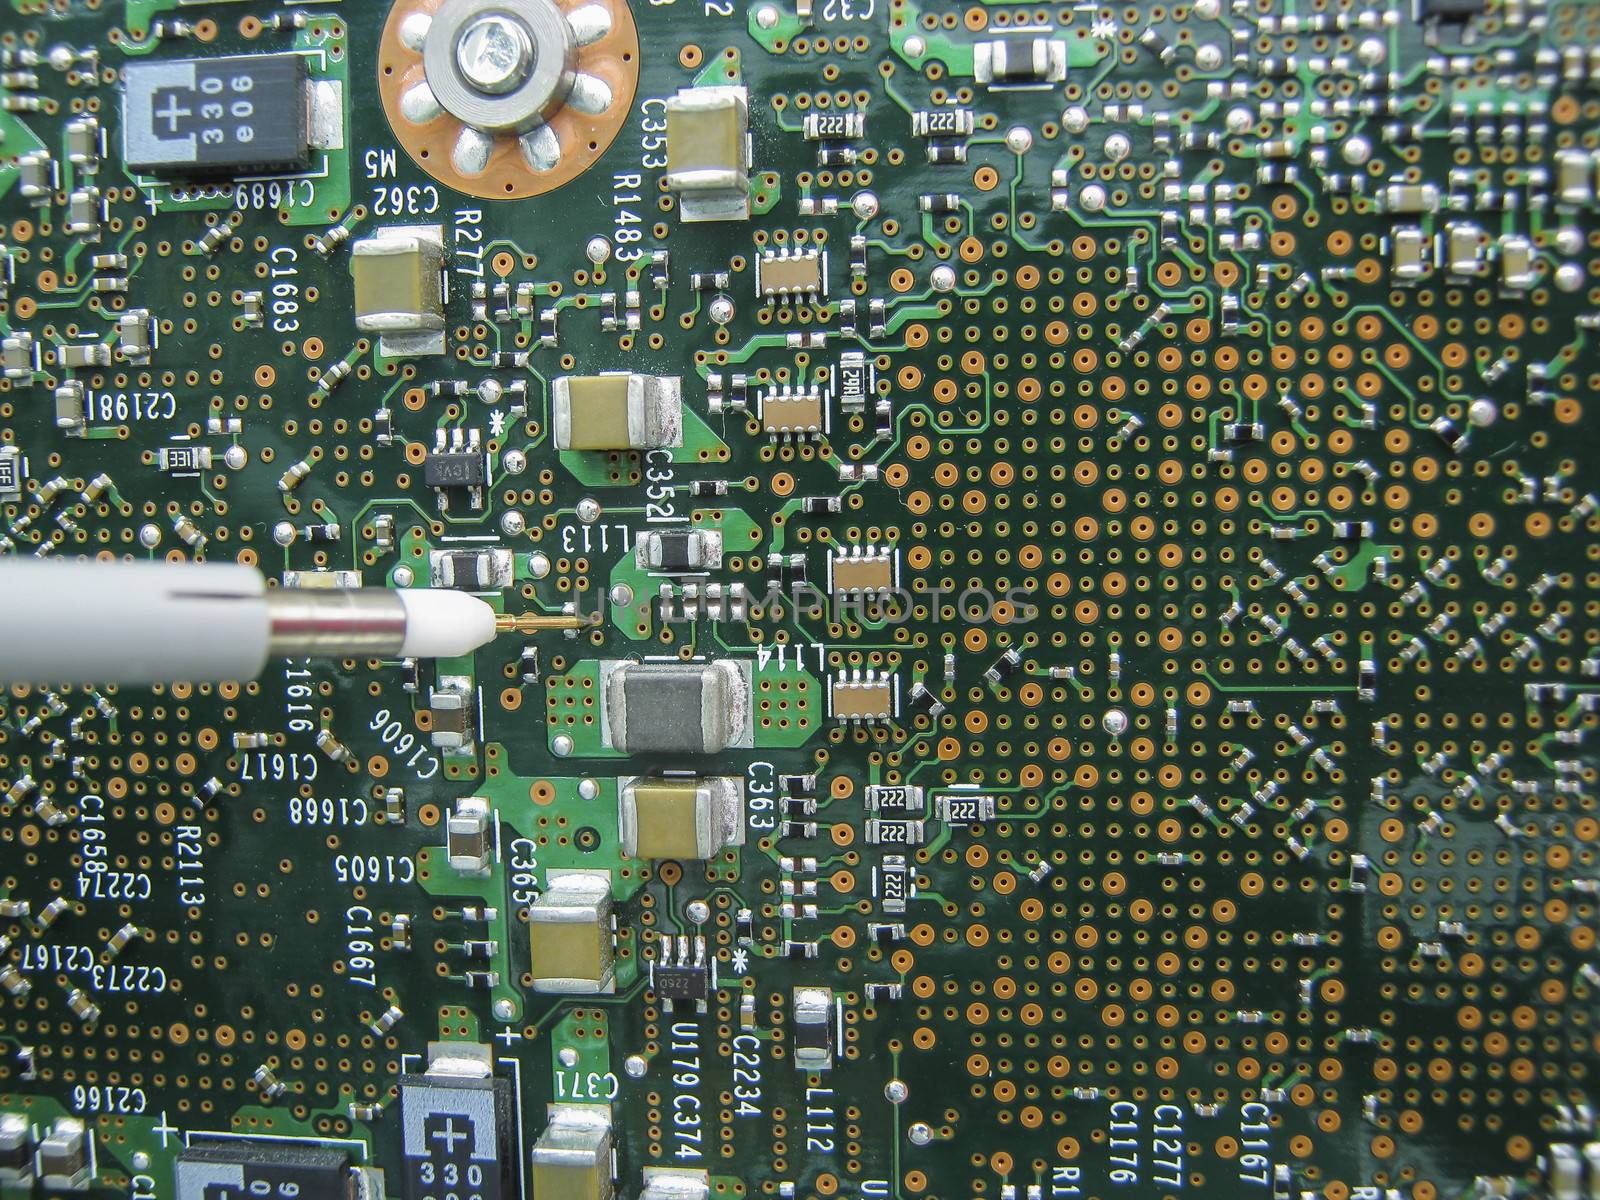 Multimeter probes examining a circuit board  by Sorapop